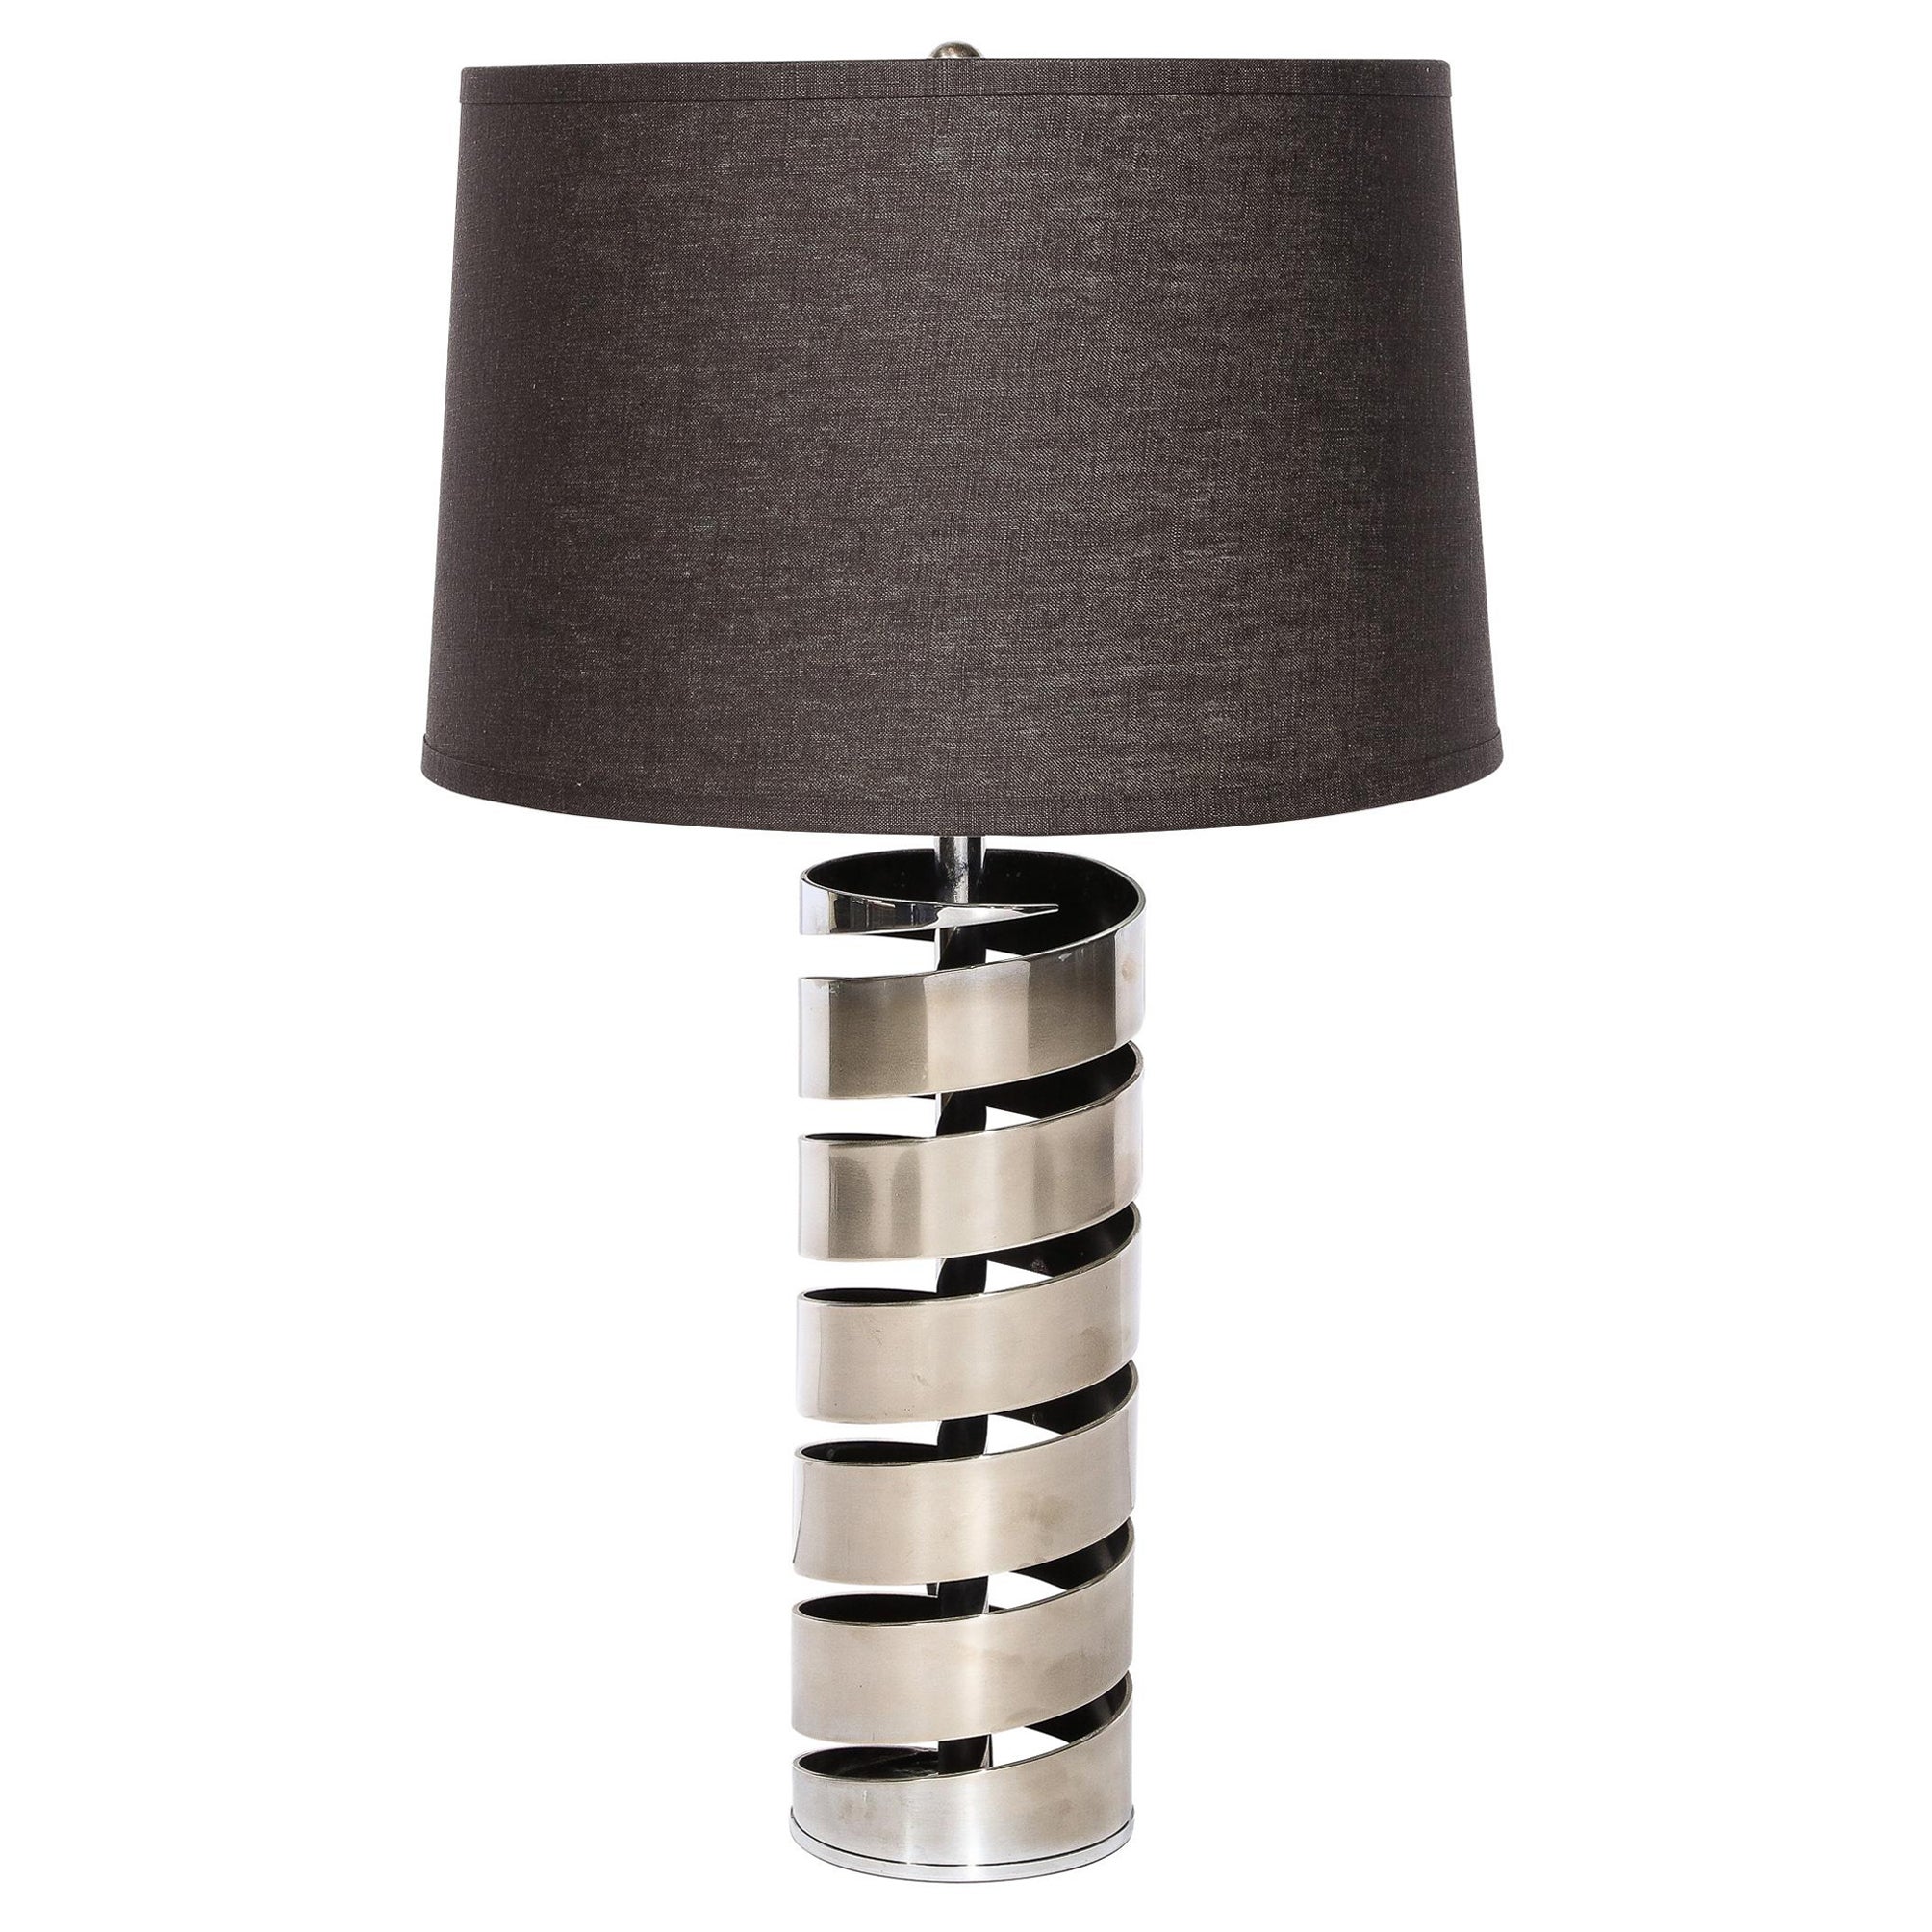 Modernist Torqued Spiral Form Table Lamp in Satin Nickel For Sale